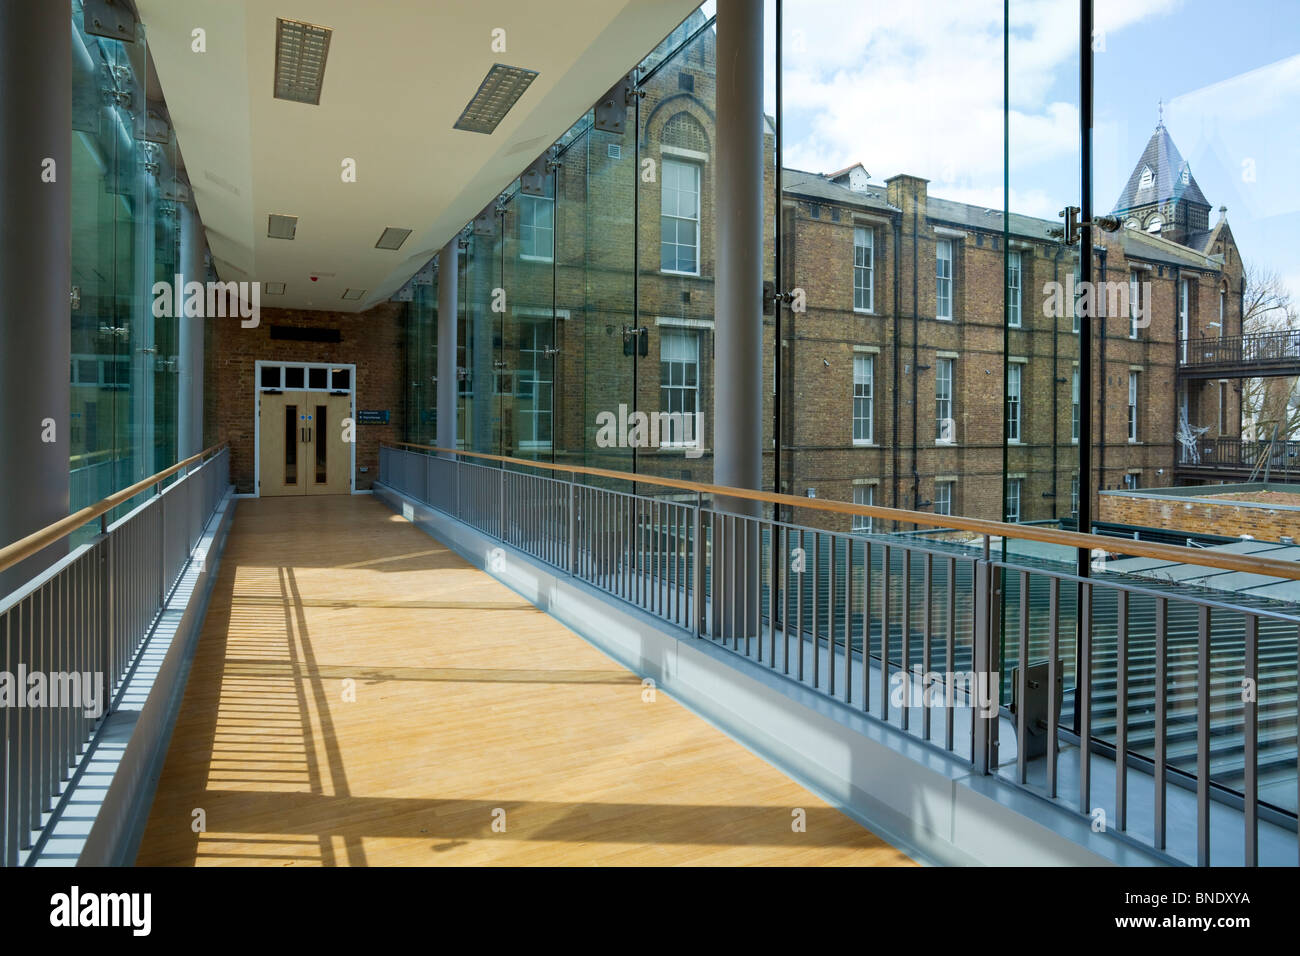 Refurbishment of Saint Charles Hospital London W10. glass link walkway Stock Photo